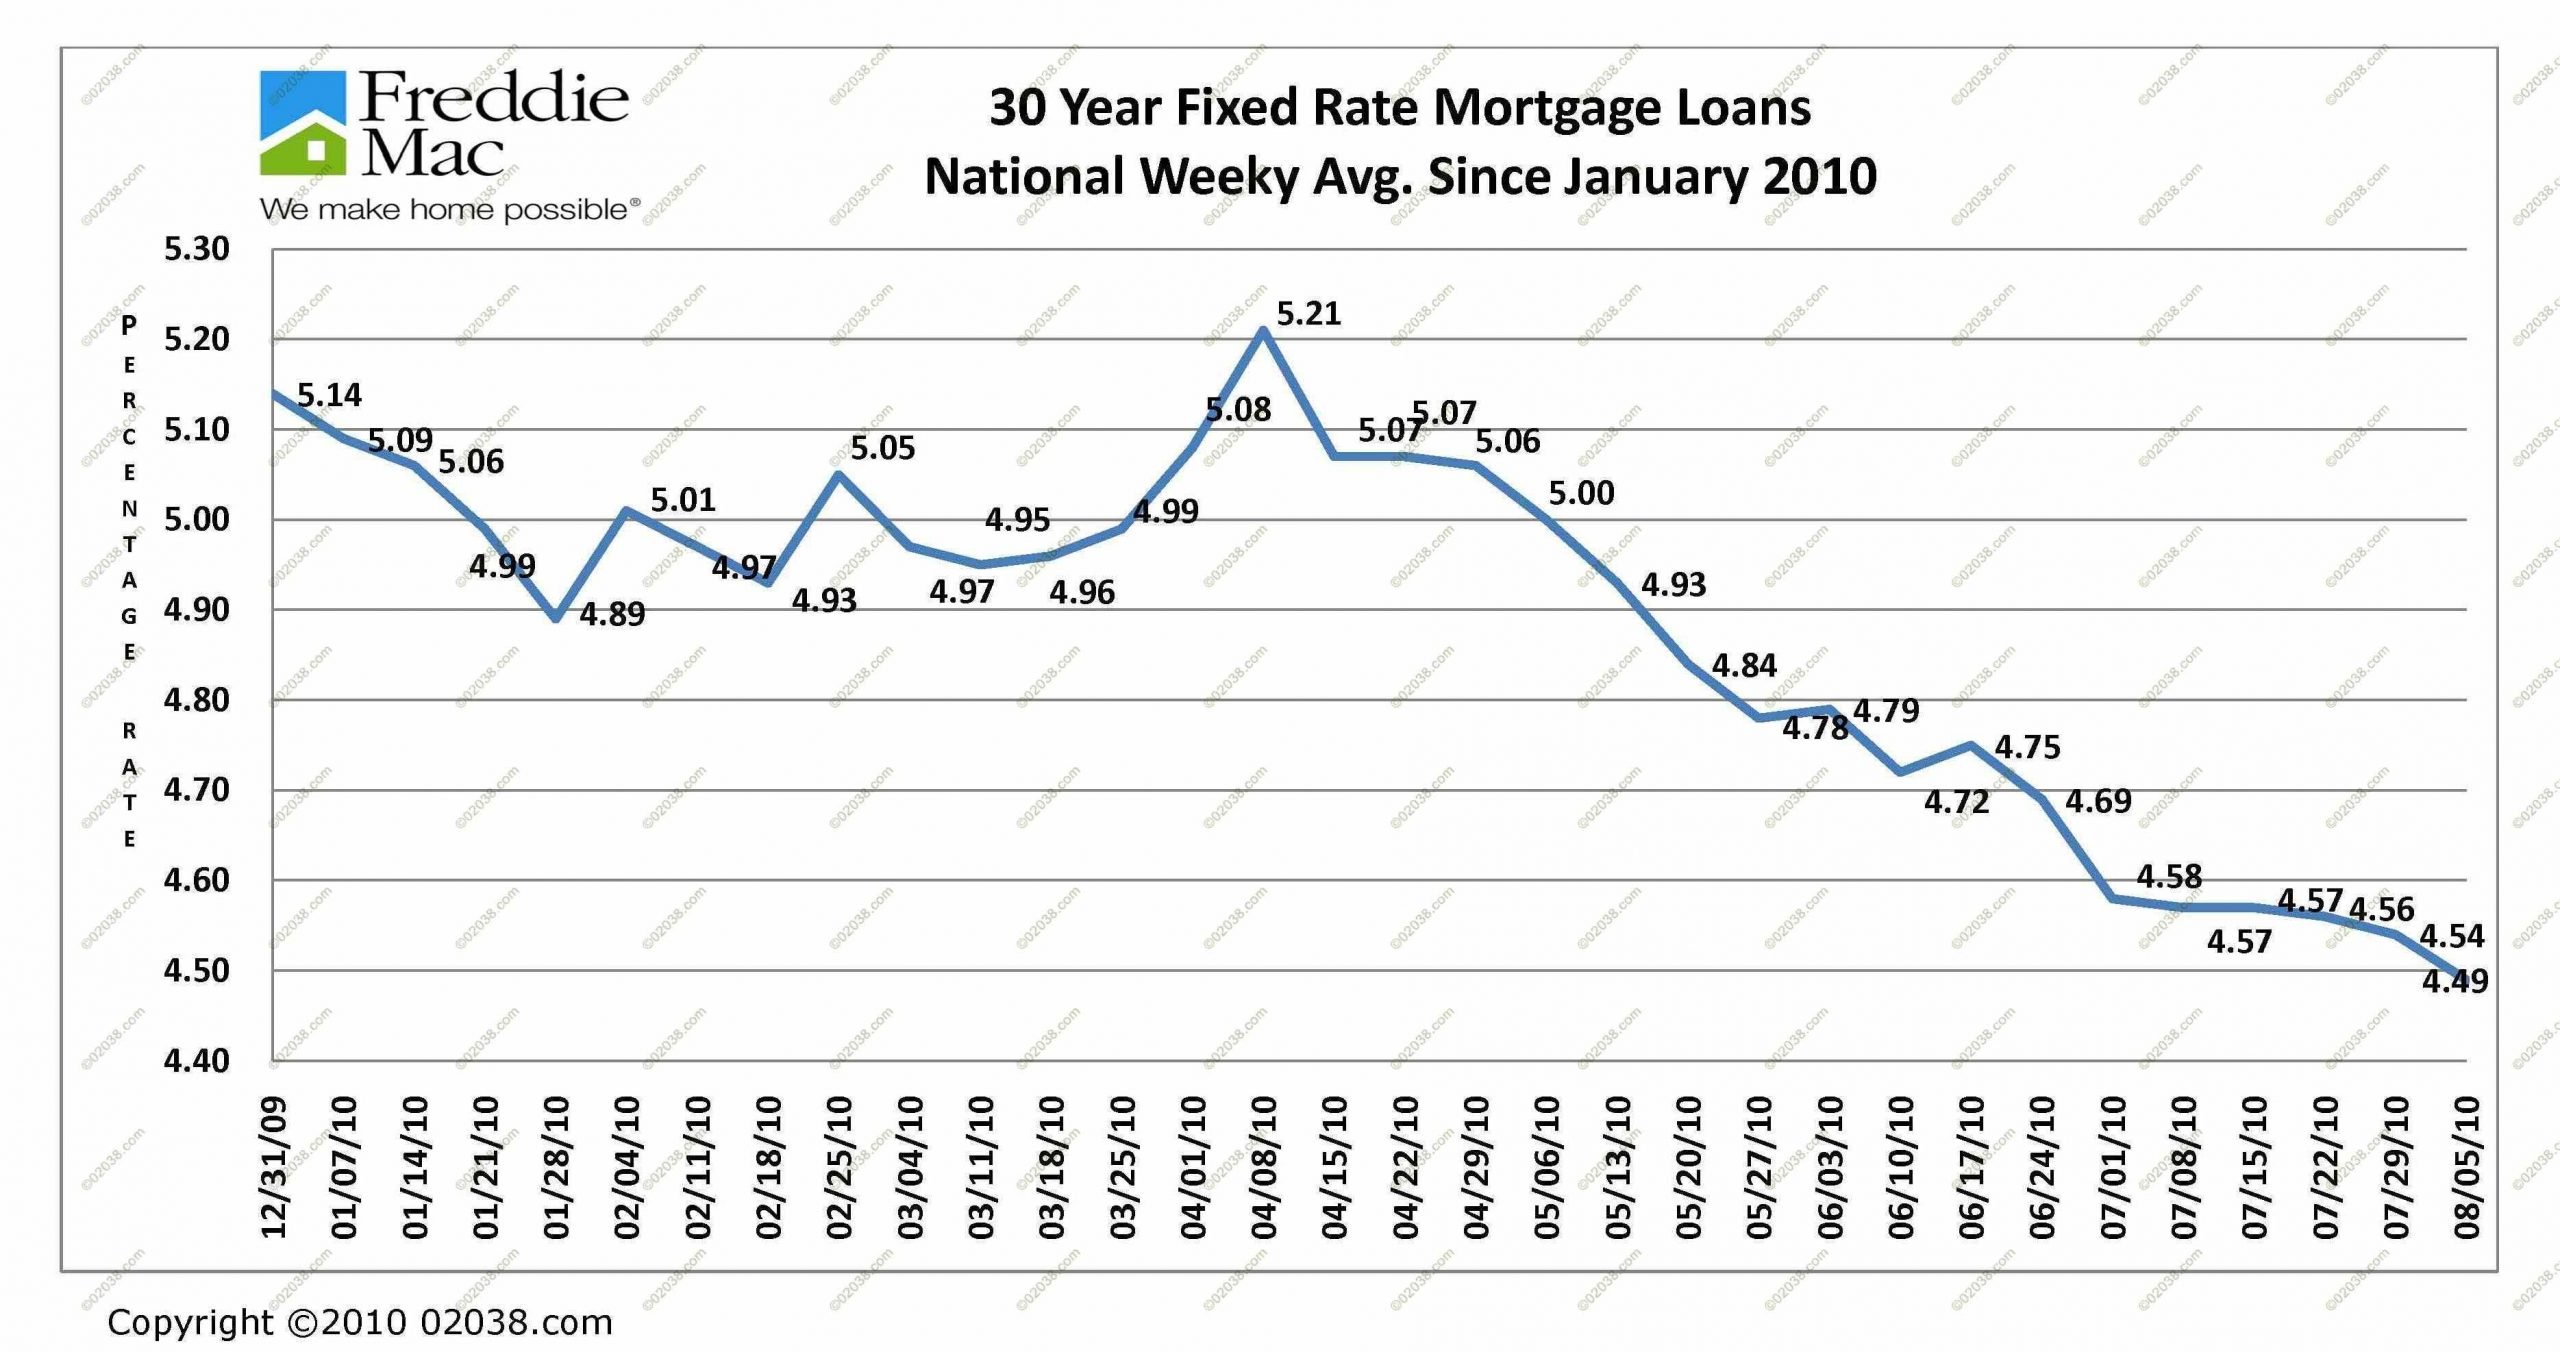 Mortgage rates at historic lows